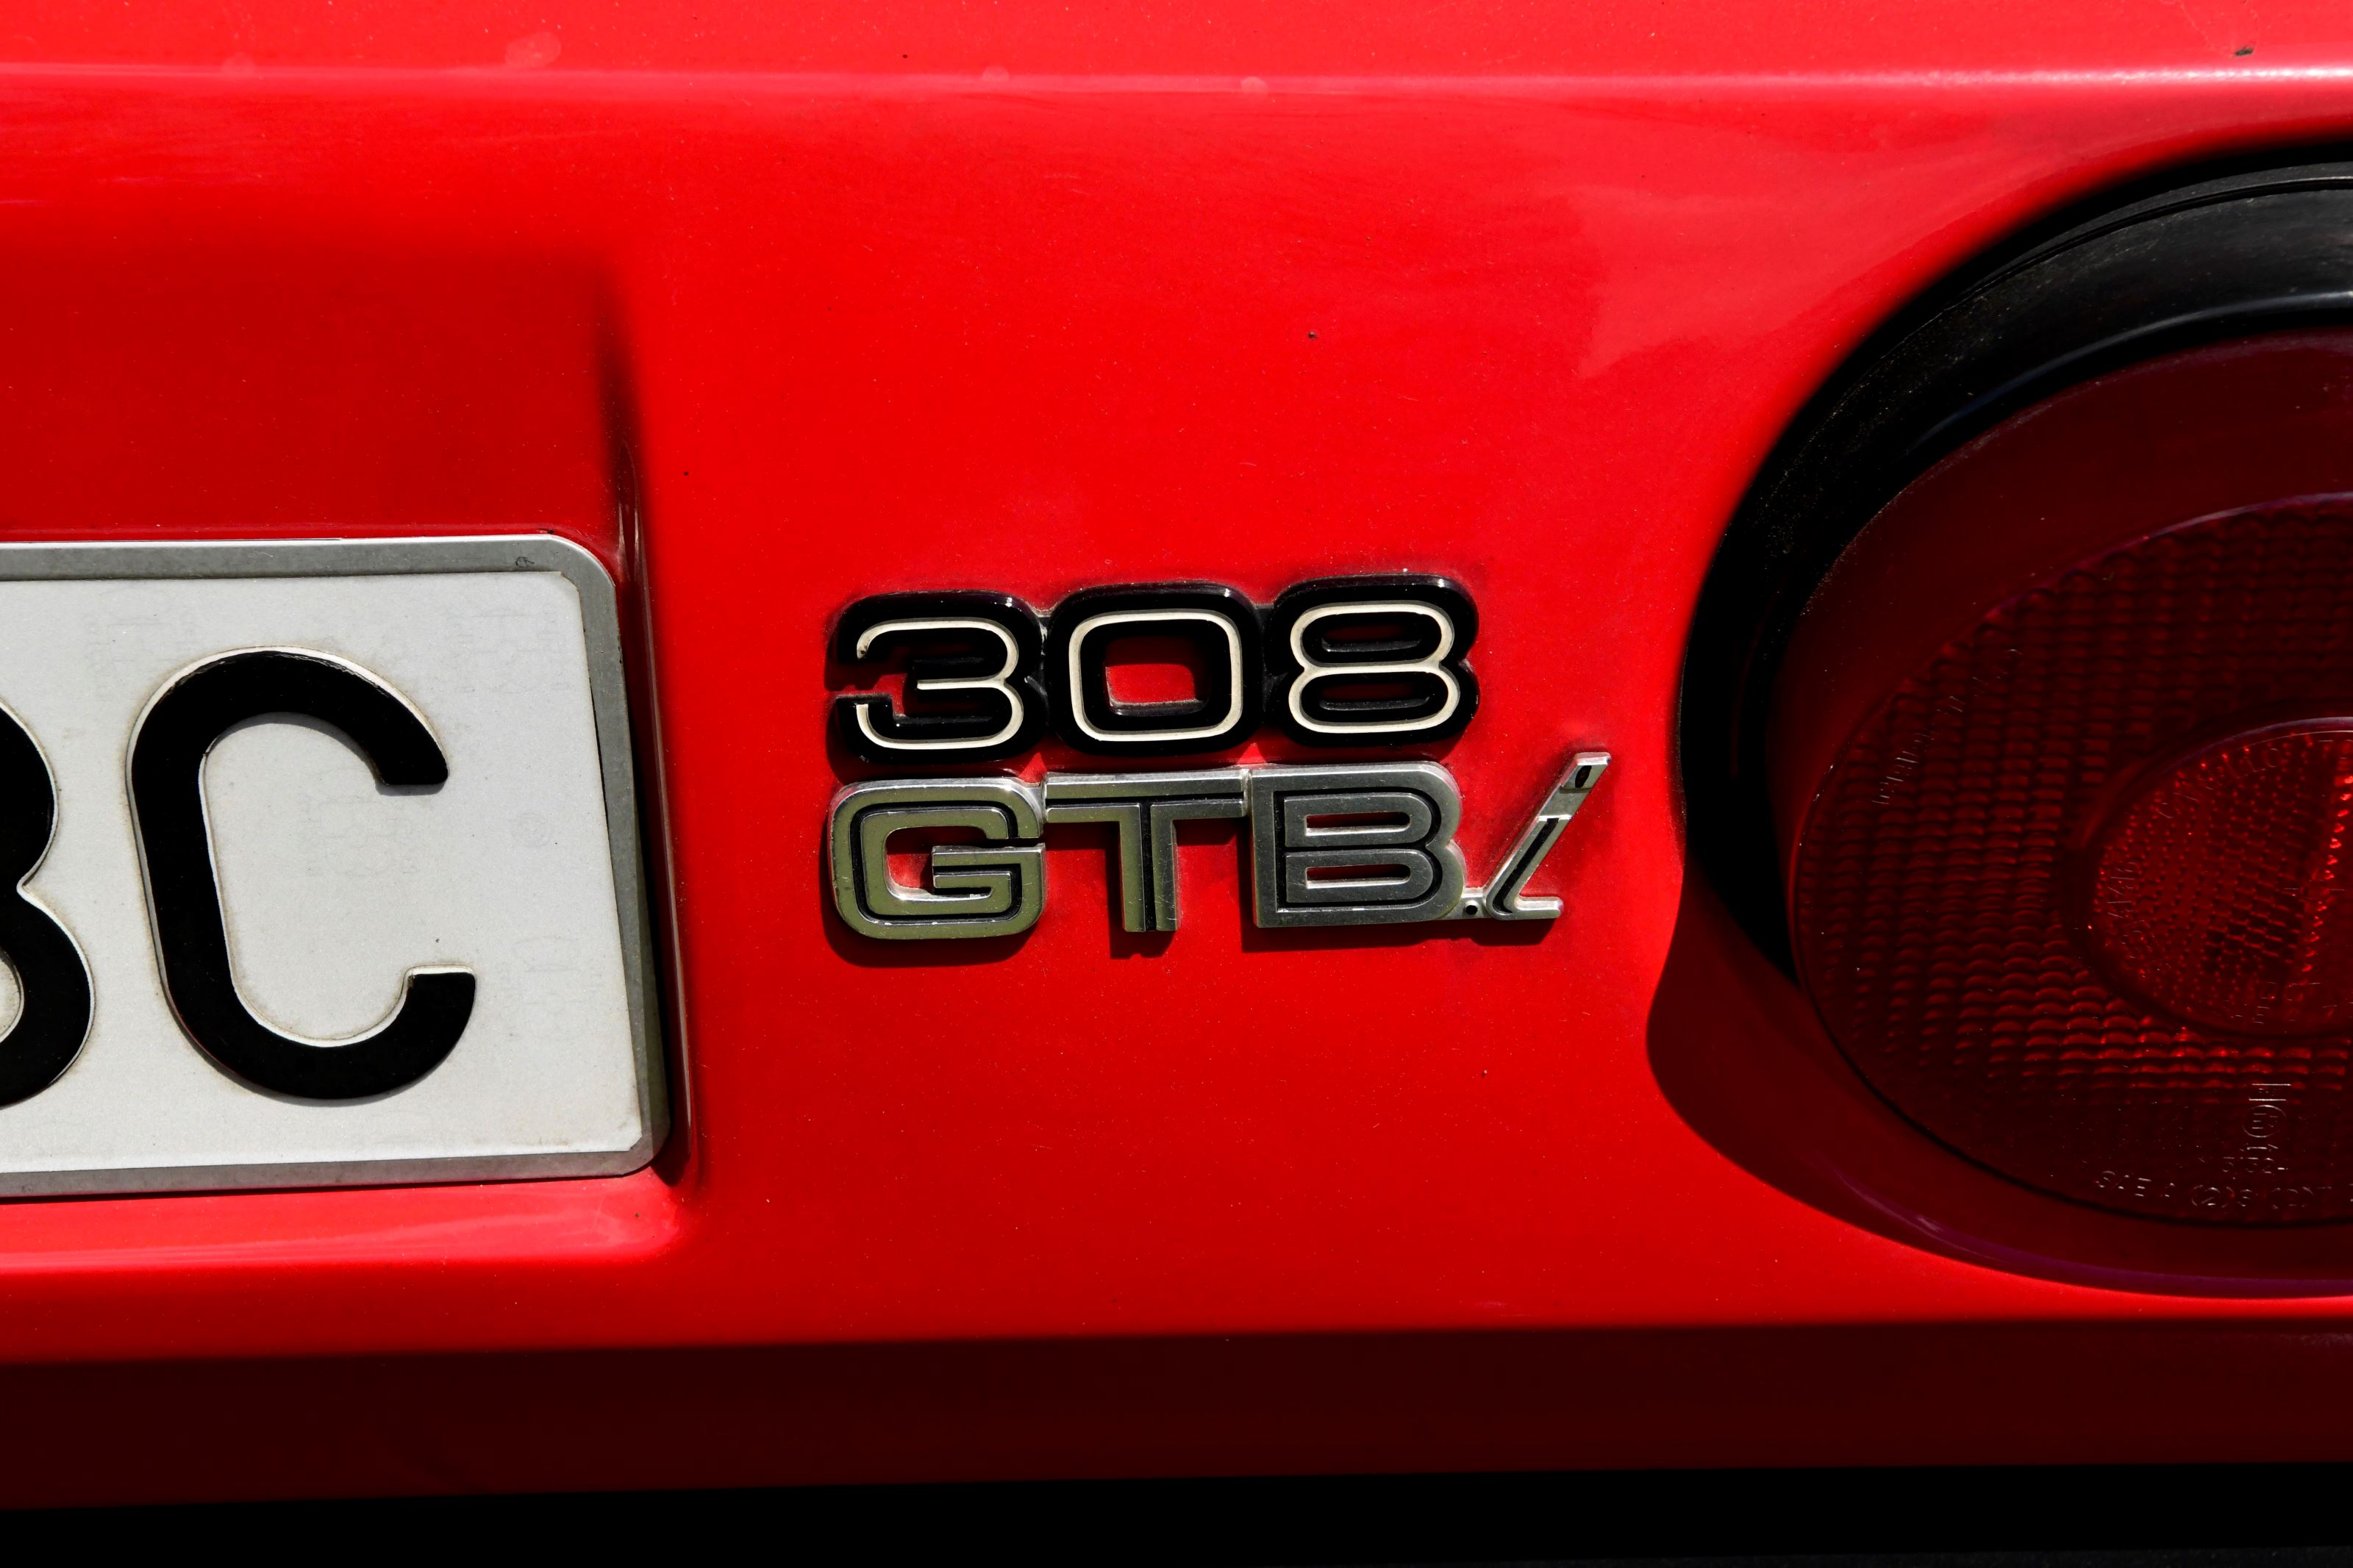 Ferrari 308 gtbi left hand drive o7b9w3jr7kfi82xb9himd